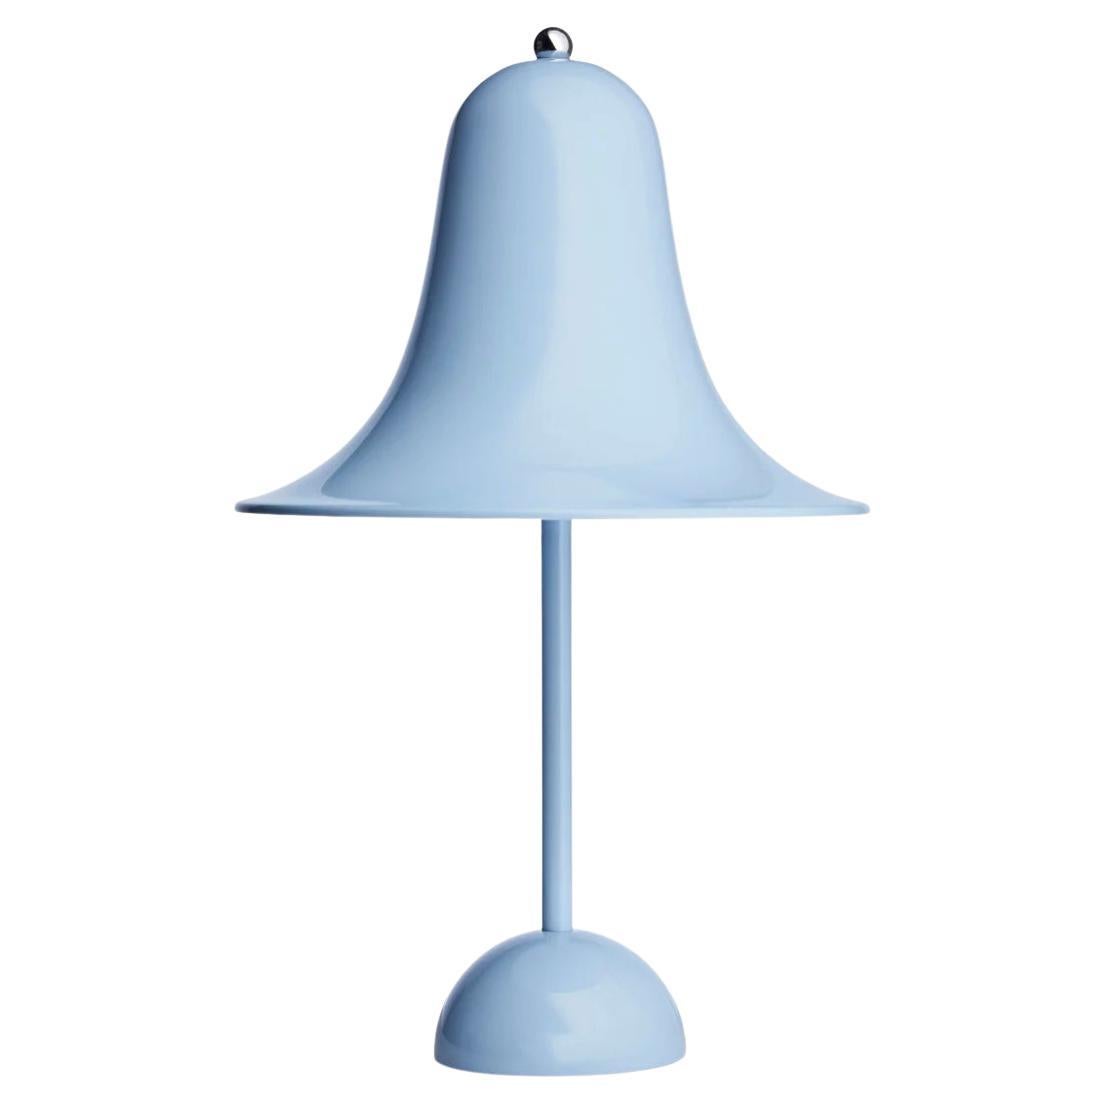 Verner Panton 'Pantop' Table Lamp in 'Light Blue' 1980 for Verpan For Sale